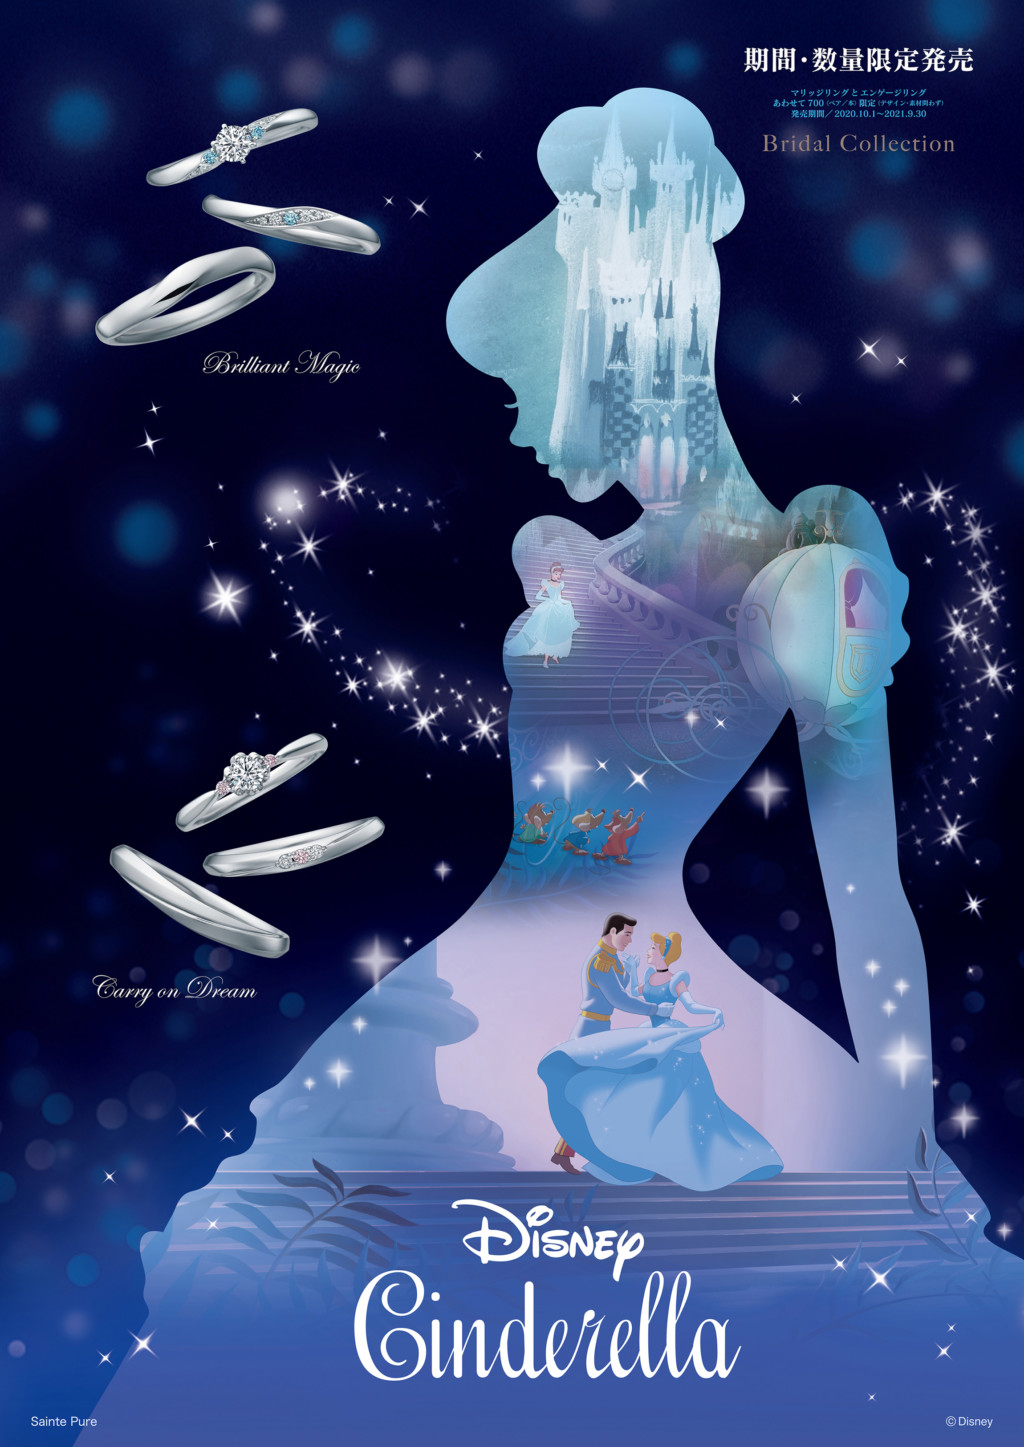 Disney Cinderella ディズニーシンデレラ ディズニーの婚約指輪 結婚指輪 大阪 梅田